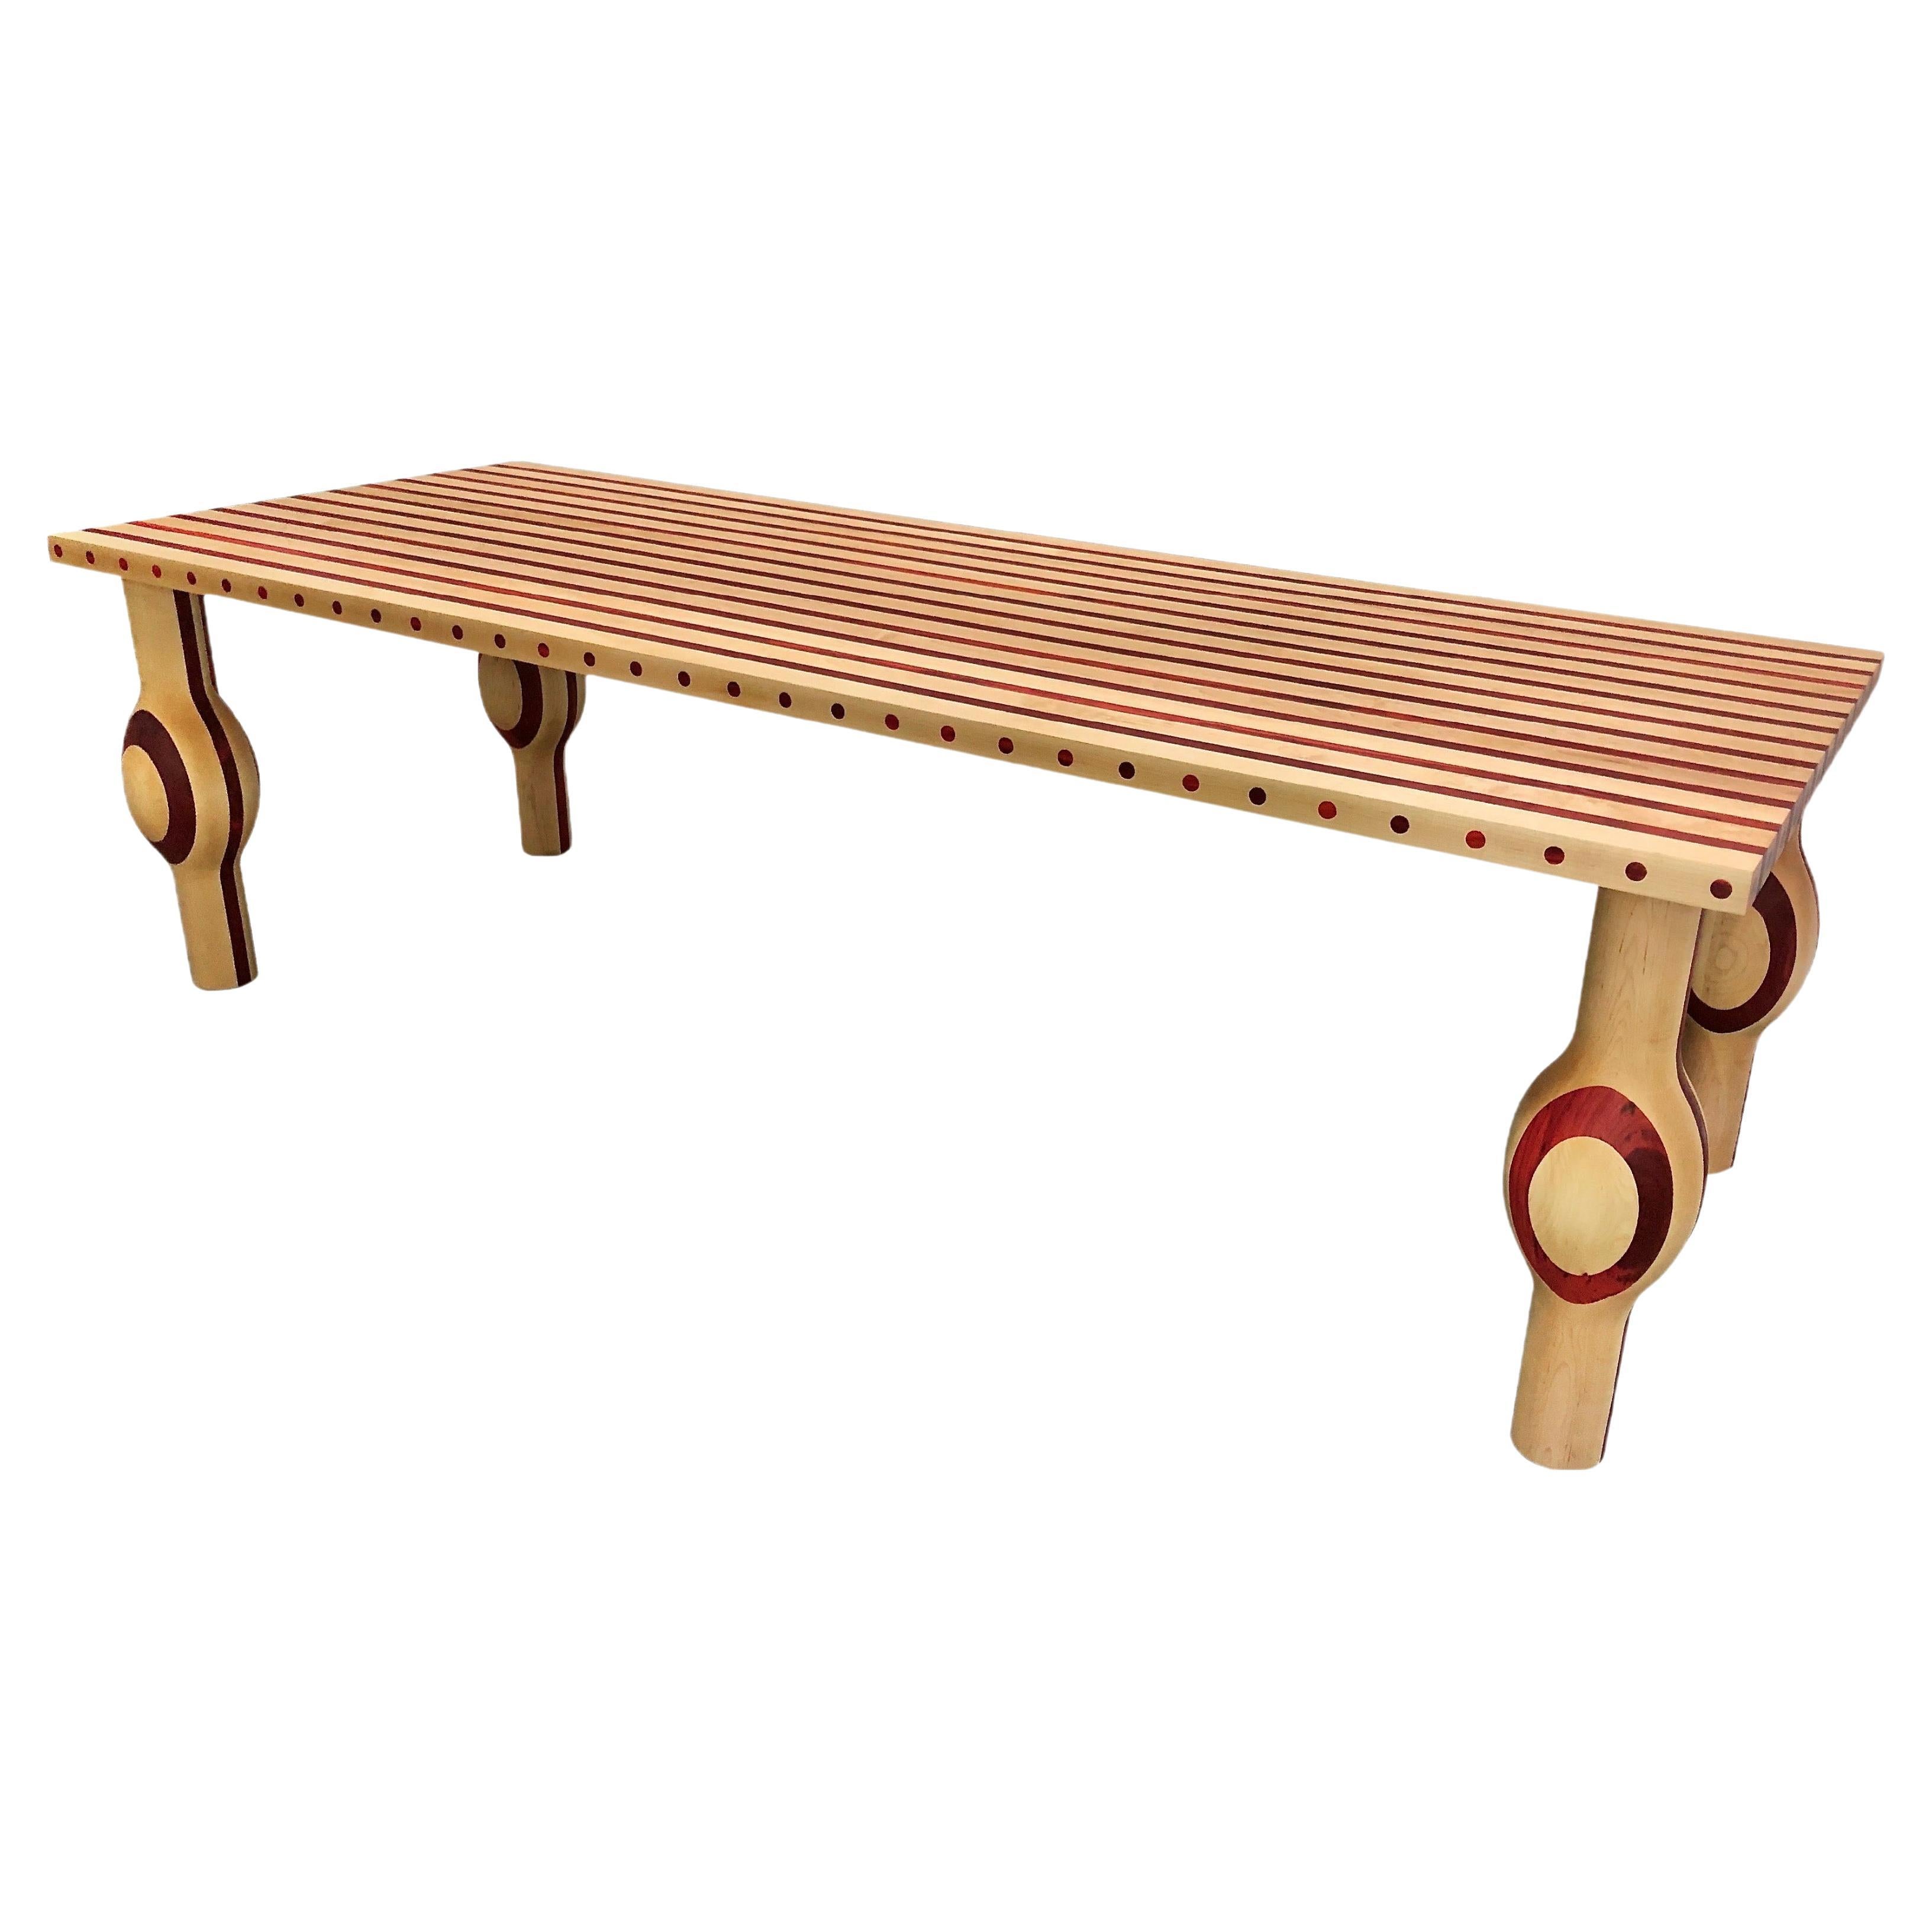 Maple & Padauk Solid Wood Dining Table